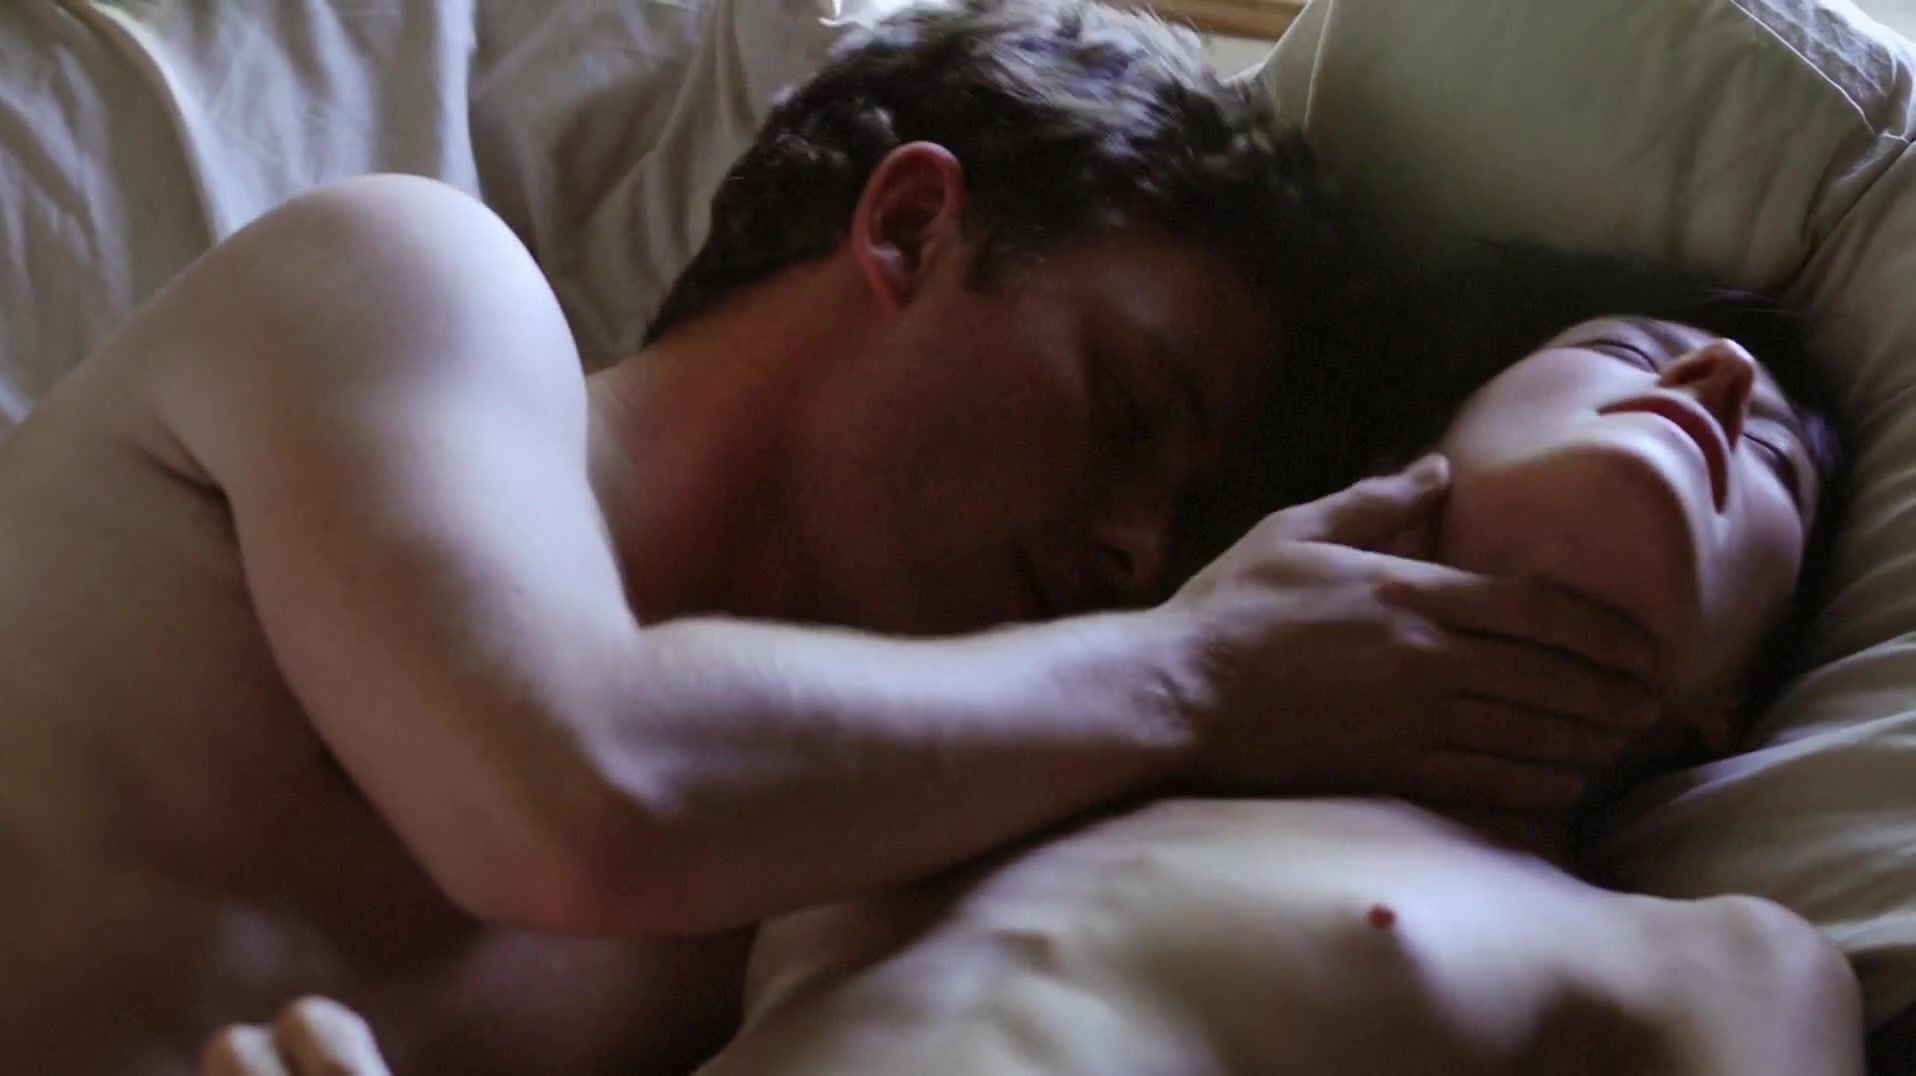 Comedor Full Frontal nudity scene of erotic movie "Hide and Seek aka Amorous" Tia - 1